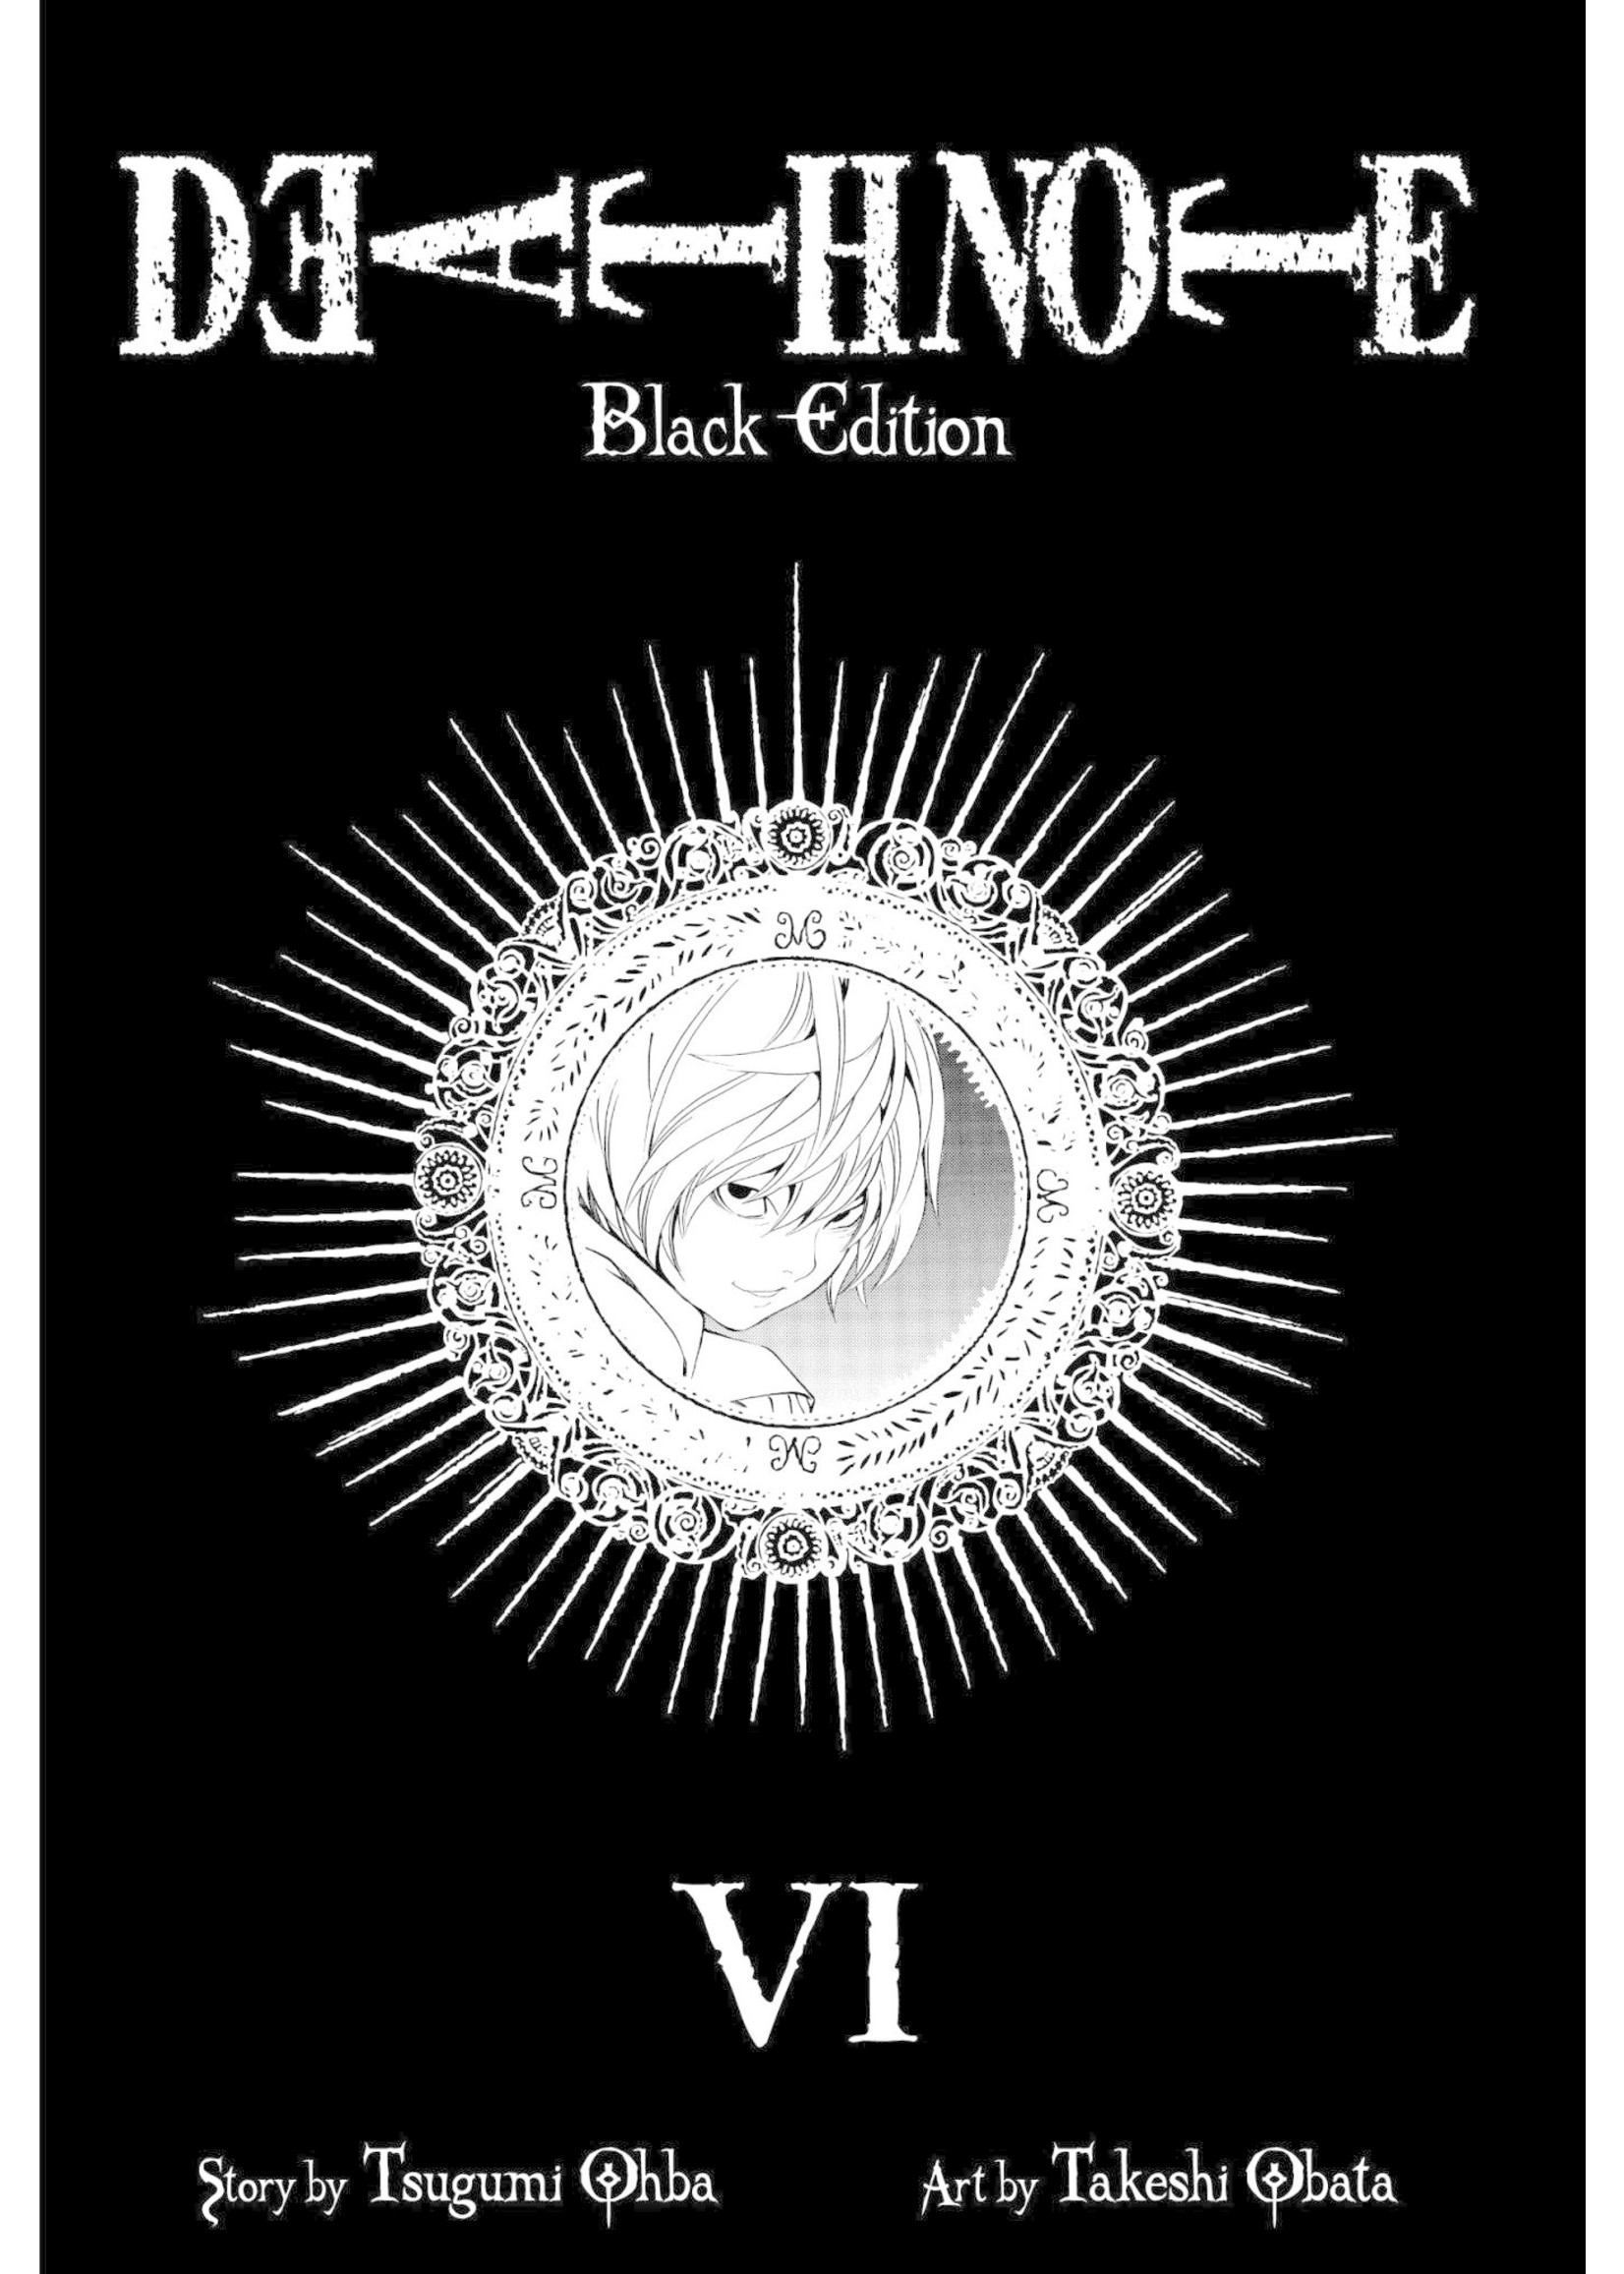 VIZ MEDIA DEATH NOTE BLACK ED VOL 06